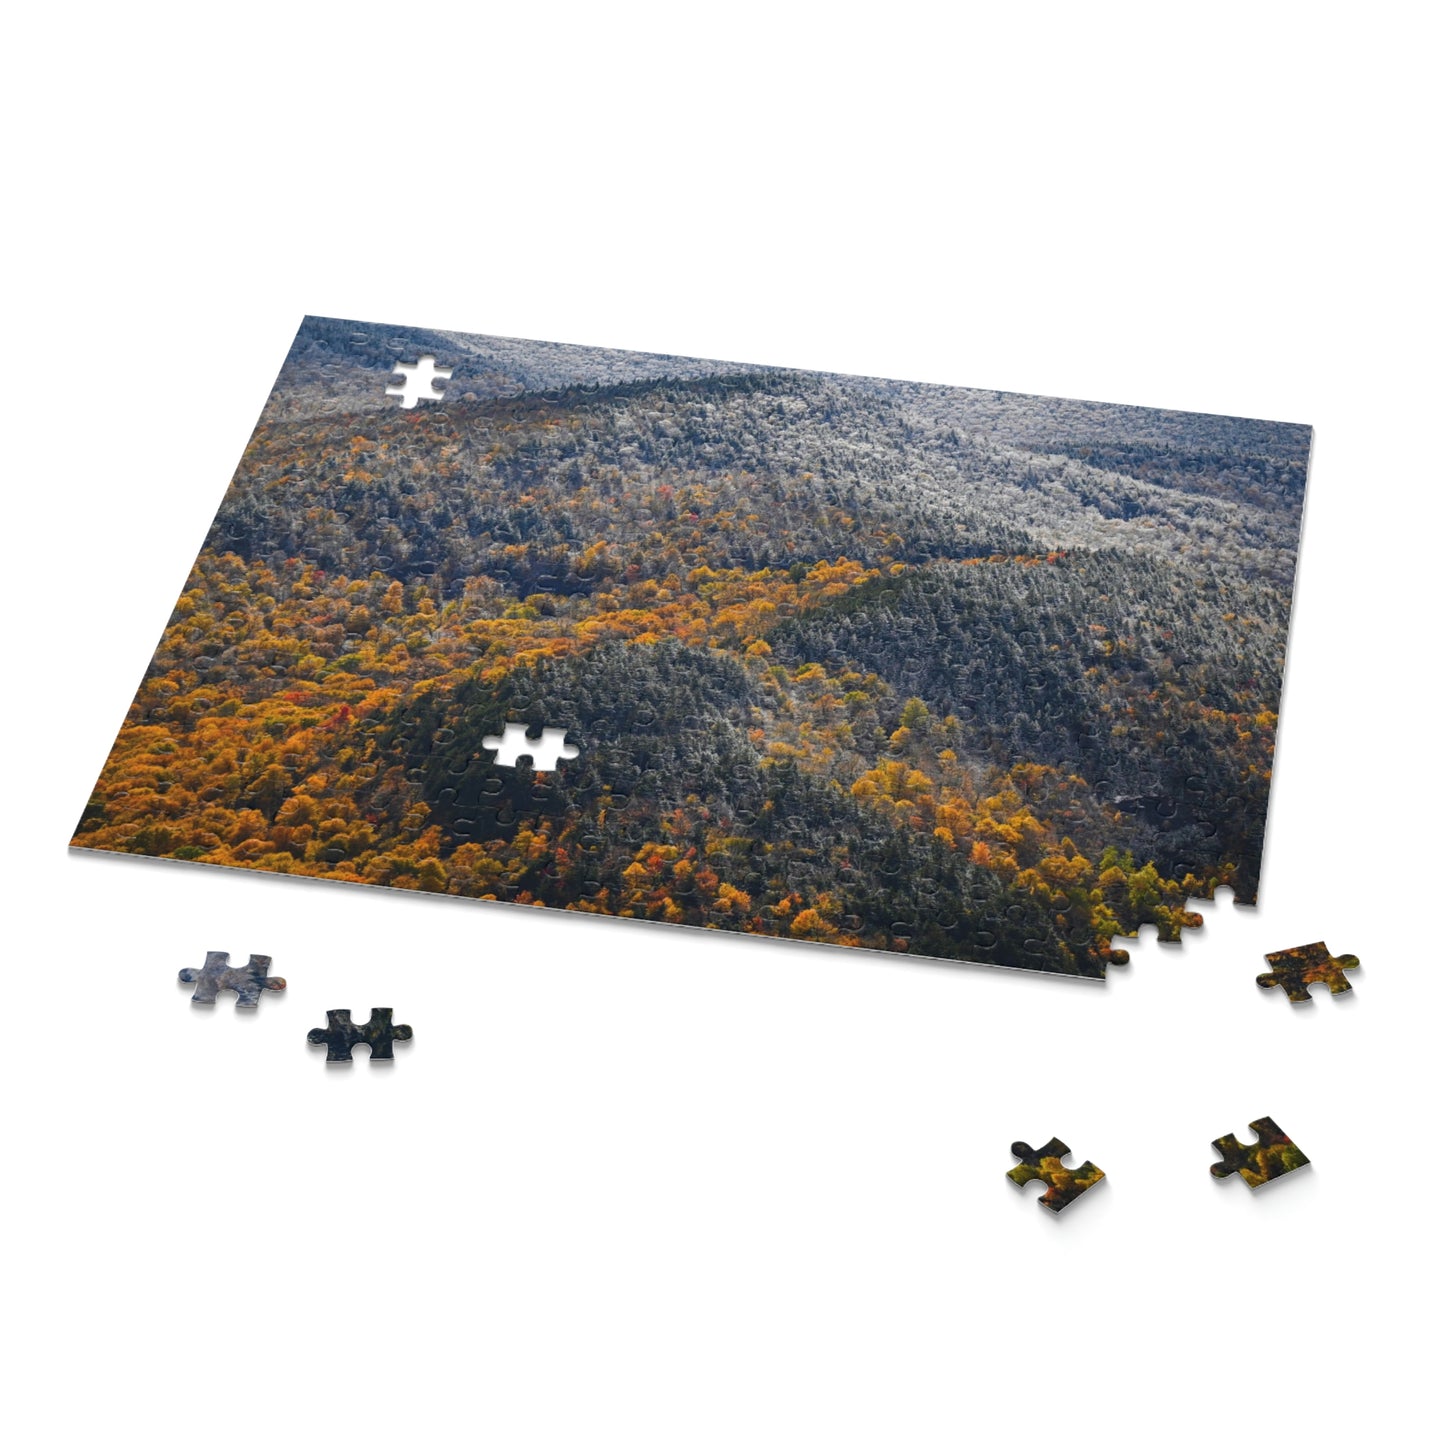 Puzzle - Seasons Collide